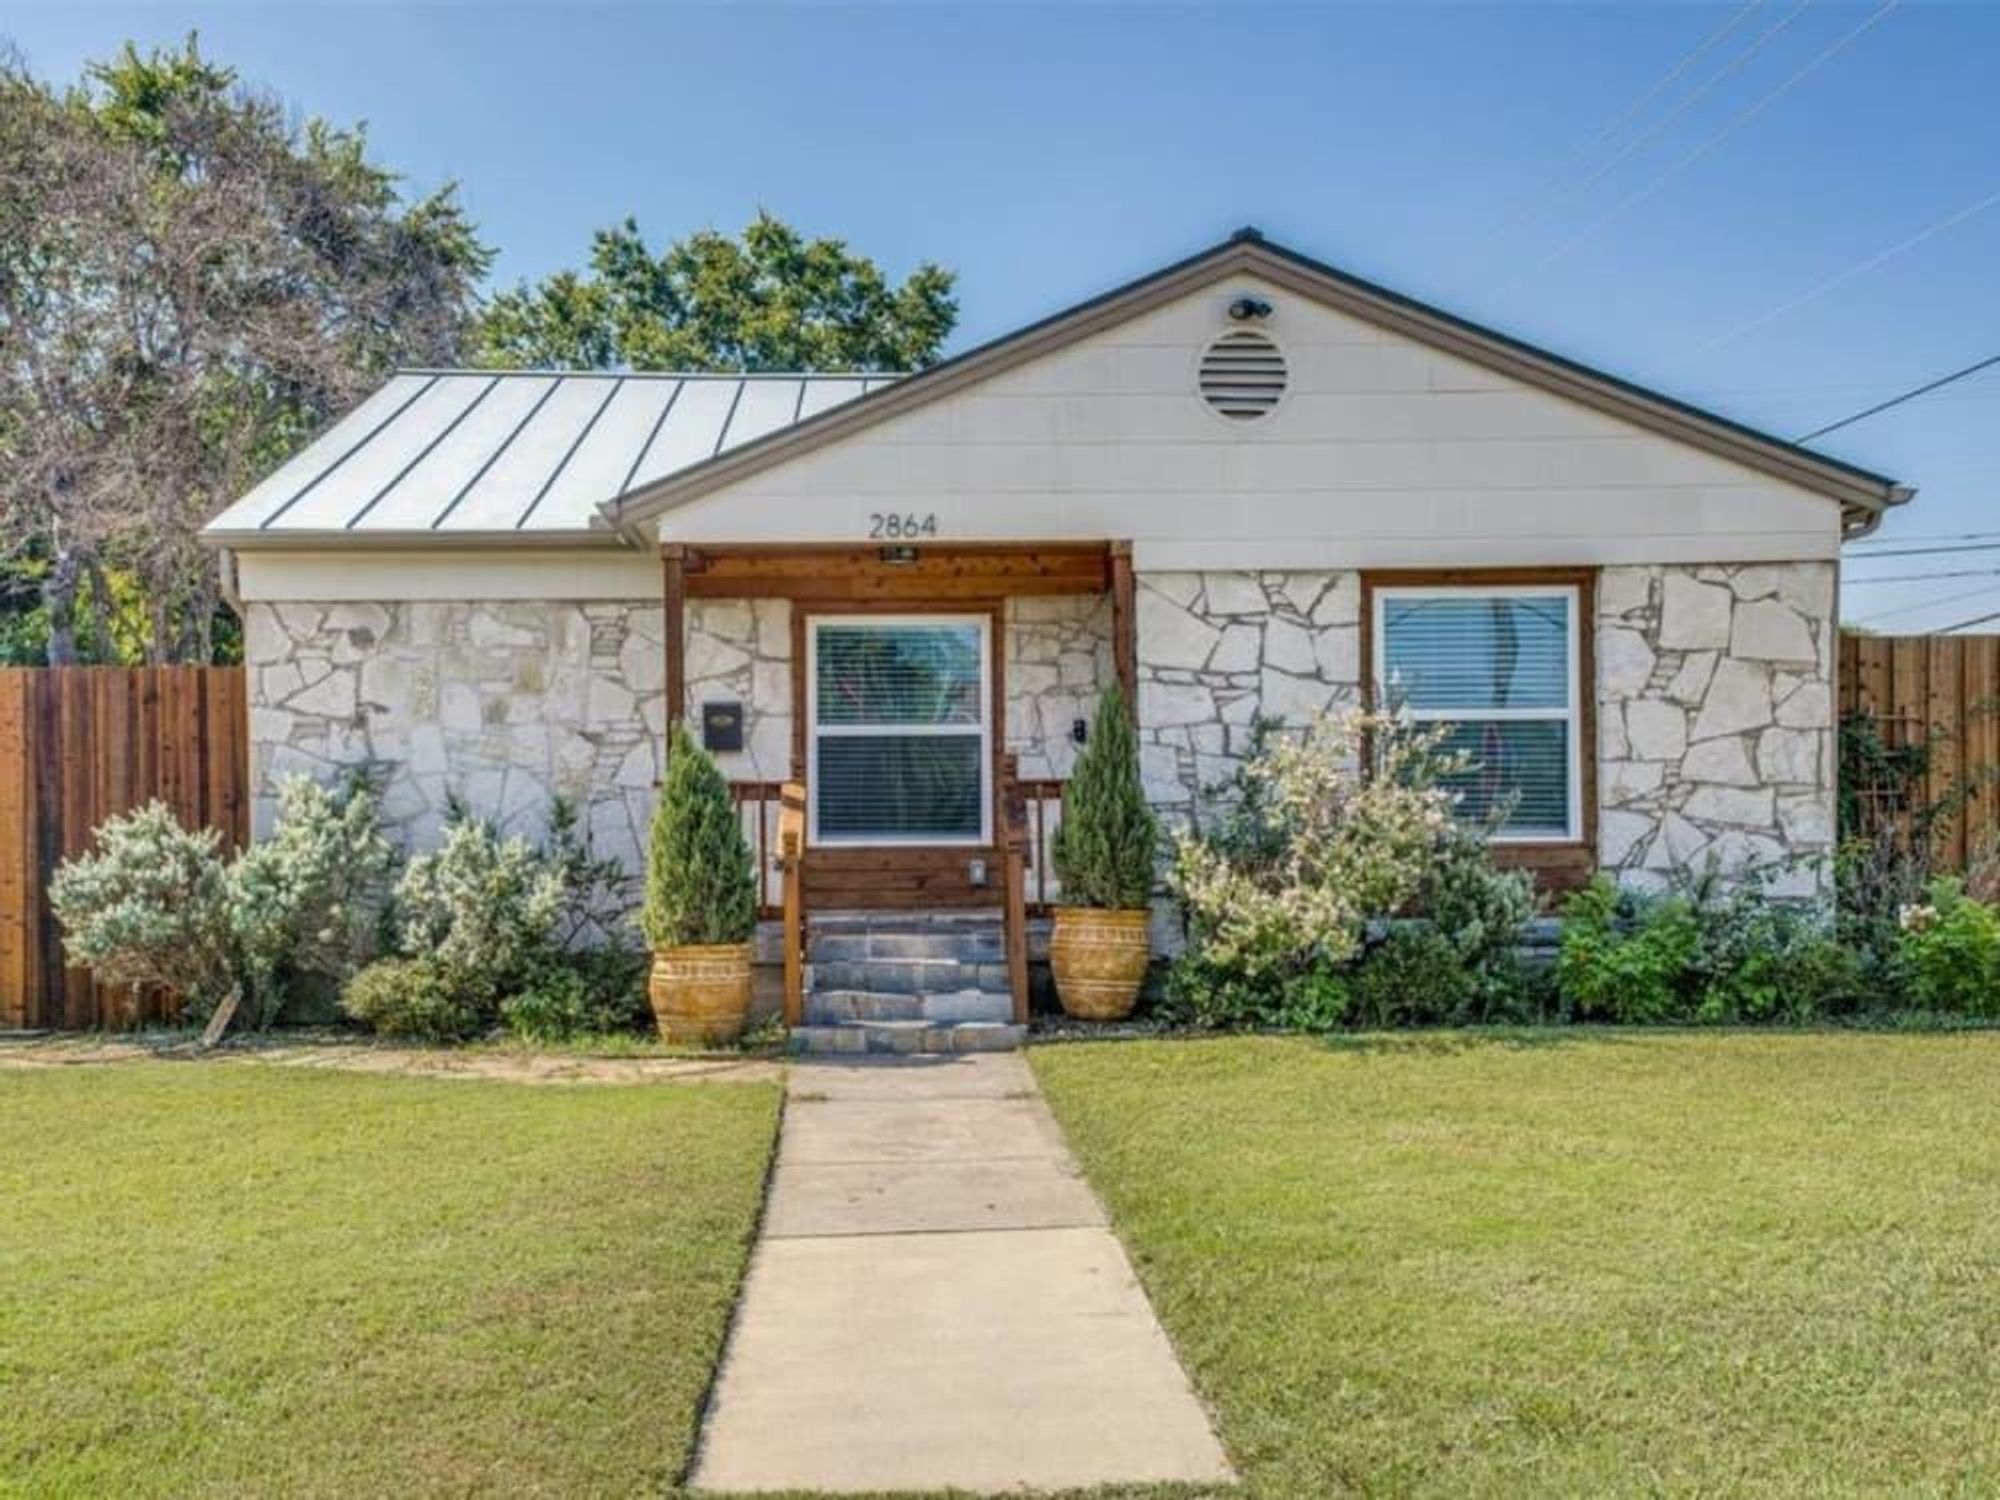 Small Dallas home for sale, 2864 Searcy Dr 75211